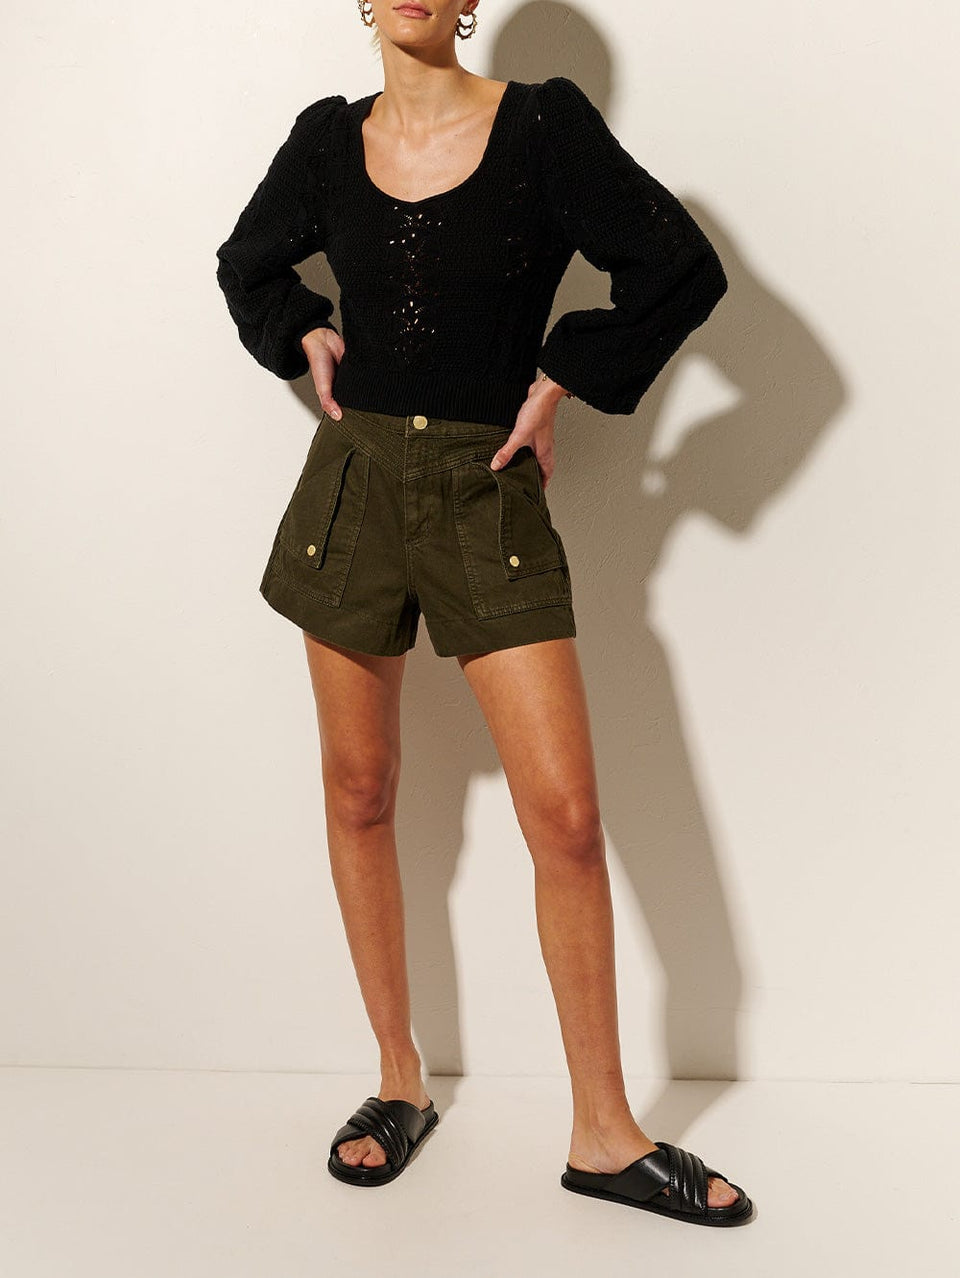 KIVARI Helena Knit Top | Model wears Black Knit Top